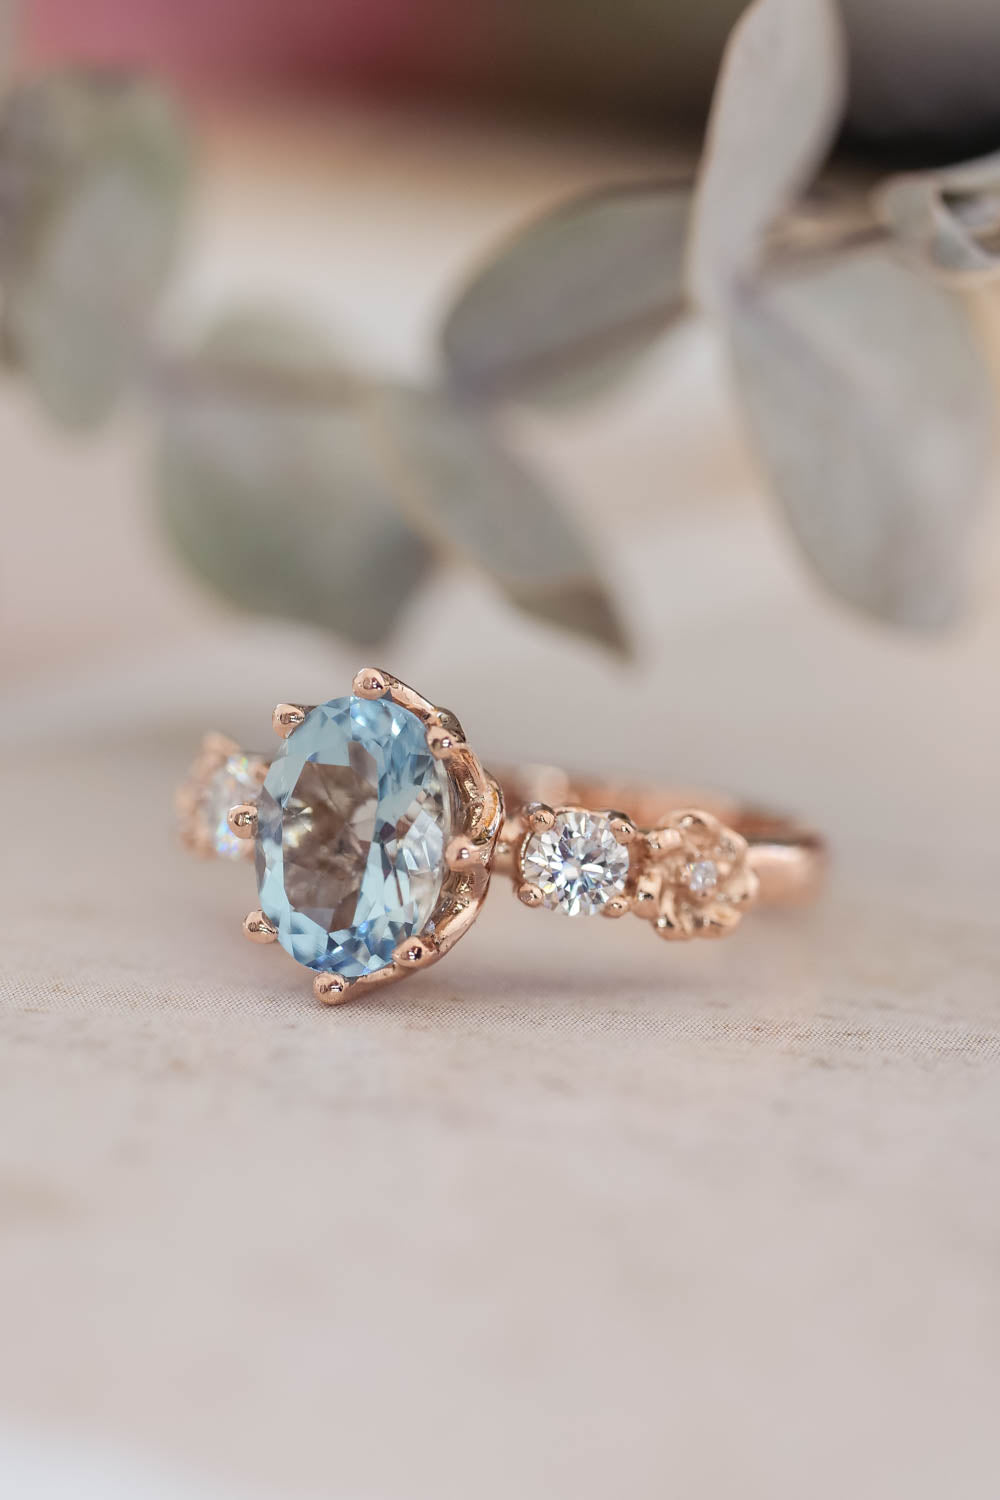 Oval aquamarine engagement ring / Fiorella - Eden Garden Jewelry™